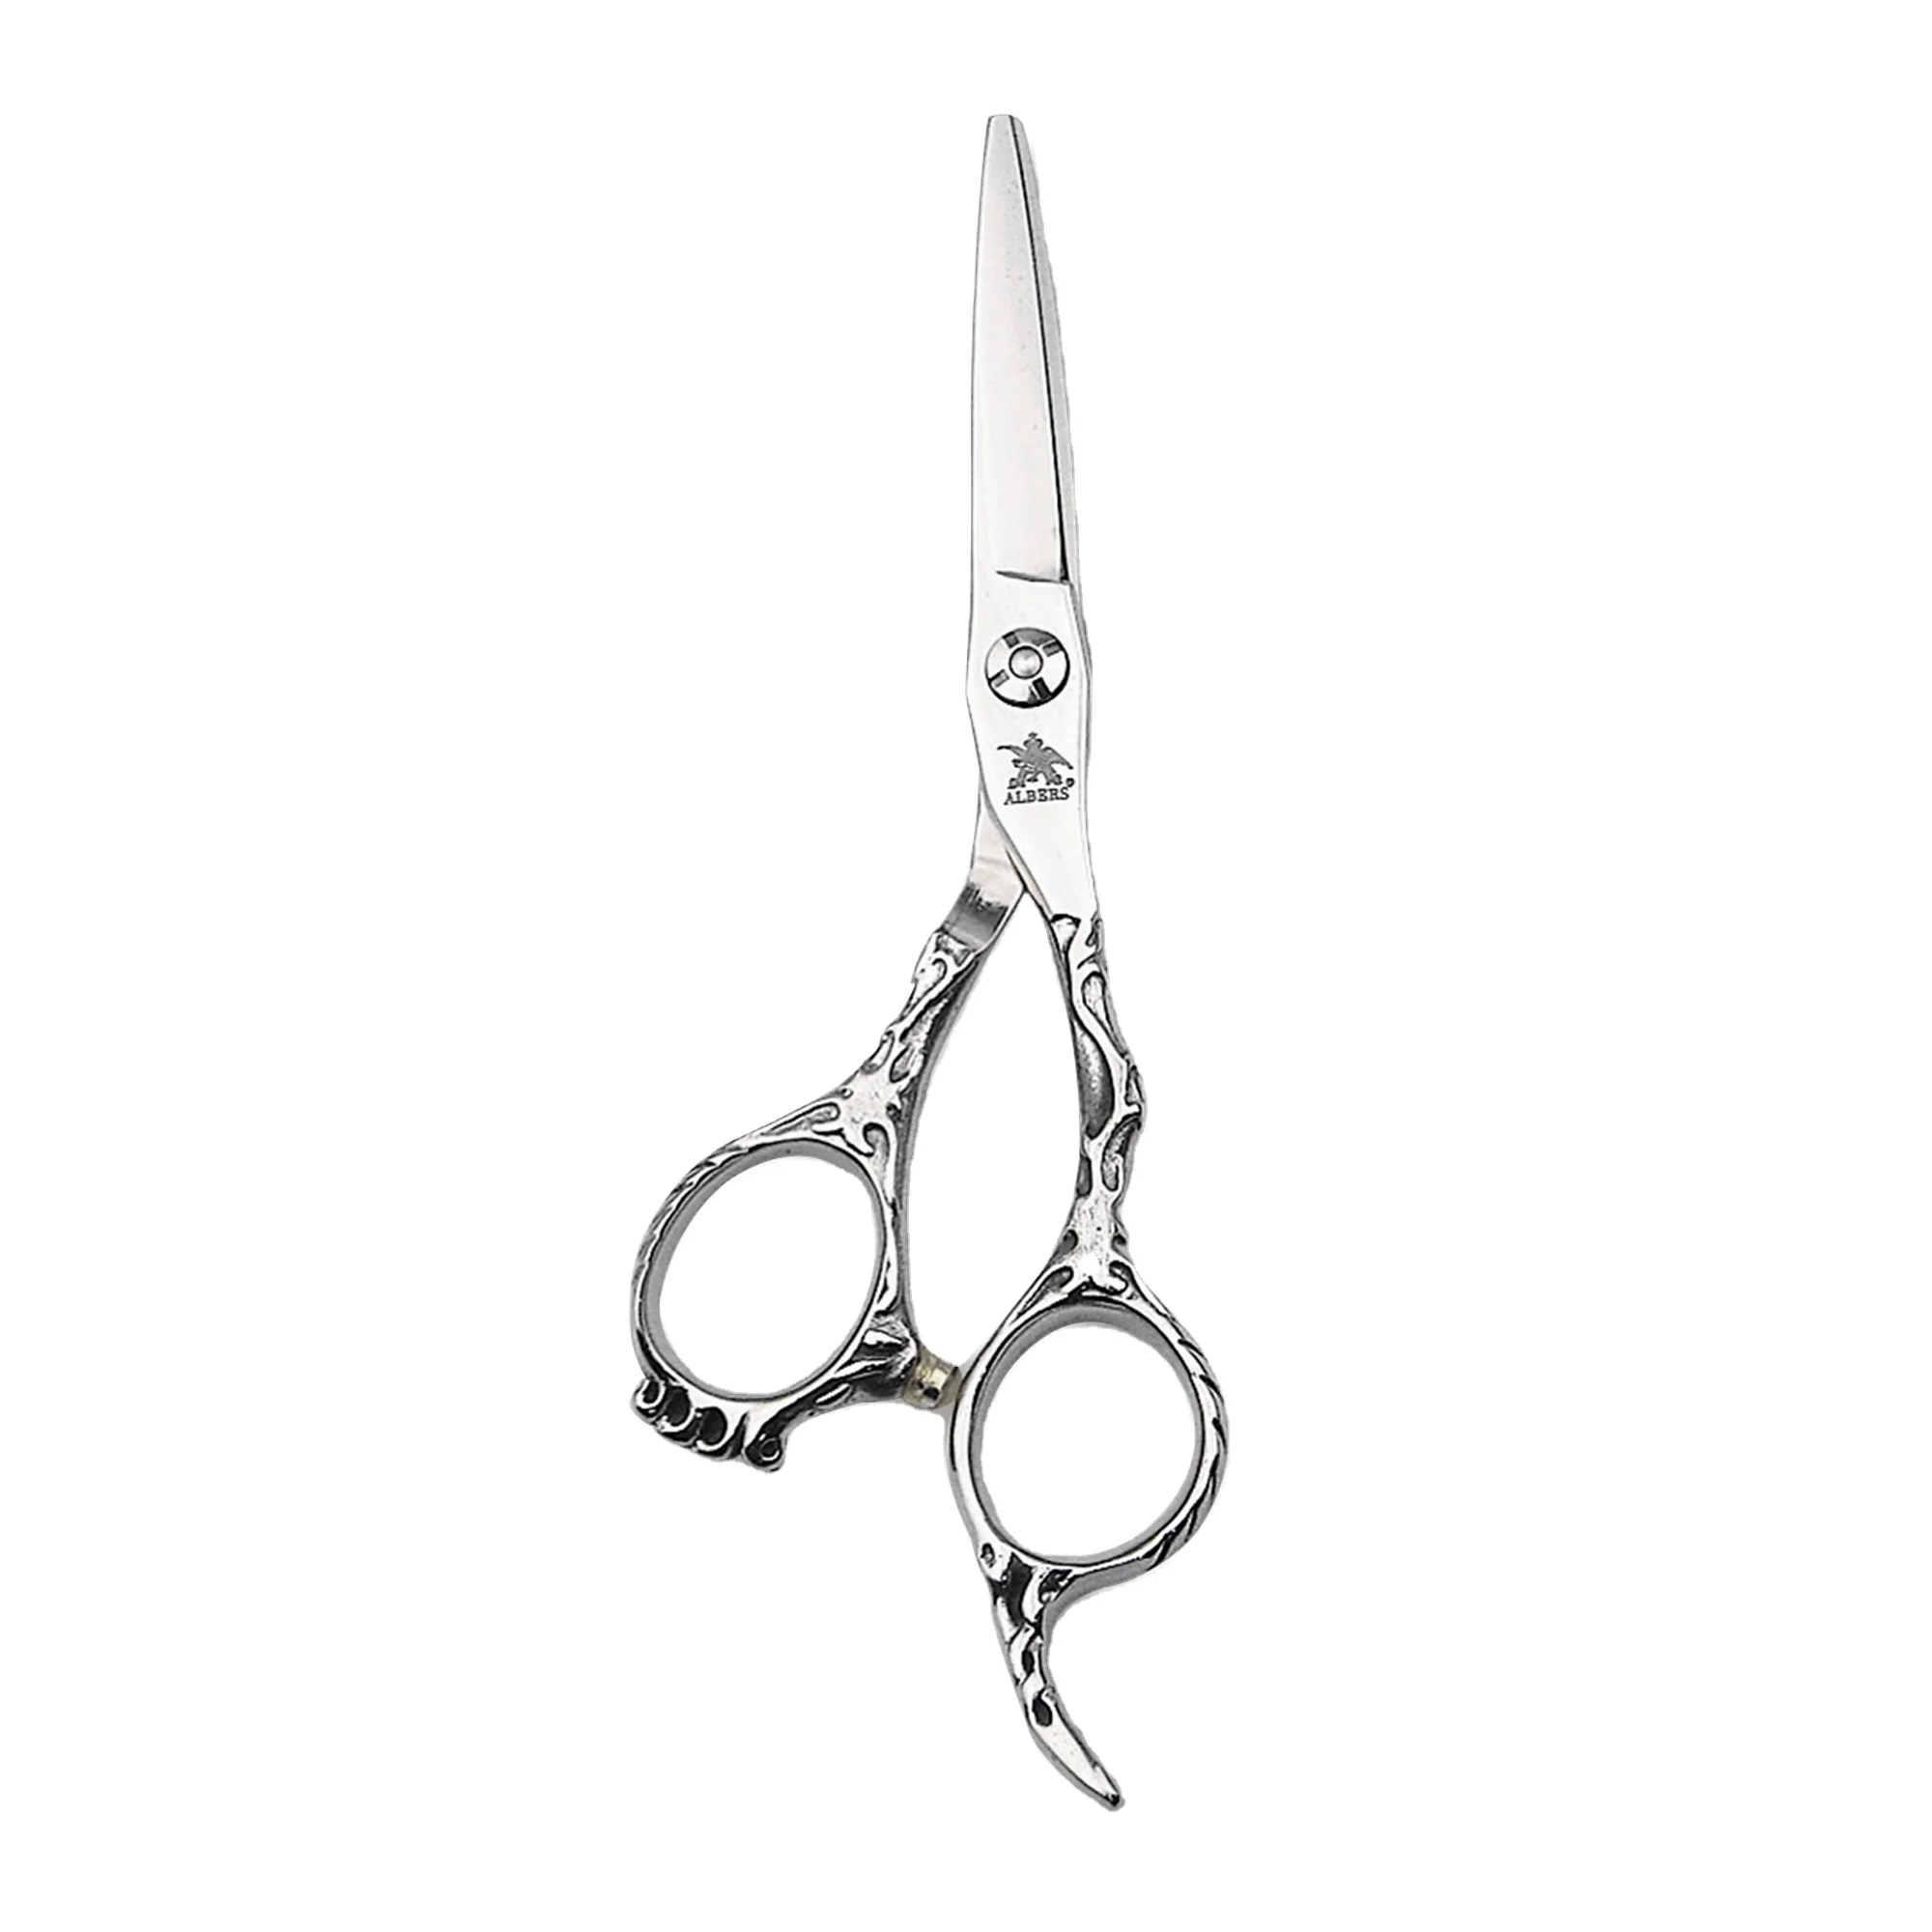 

MARIGOLD Hot scissors Japan 440c steel Barber Beard and design hair Shears Scissors Stainless Steel, Silver